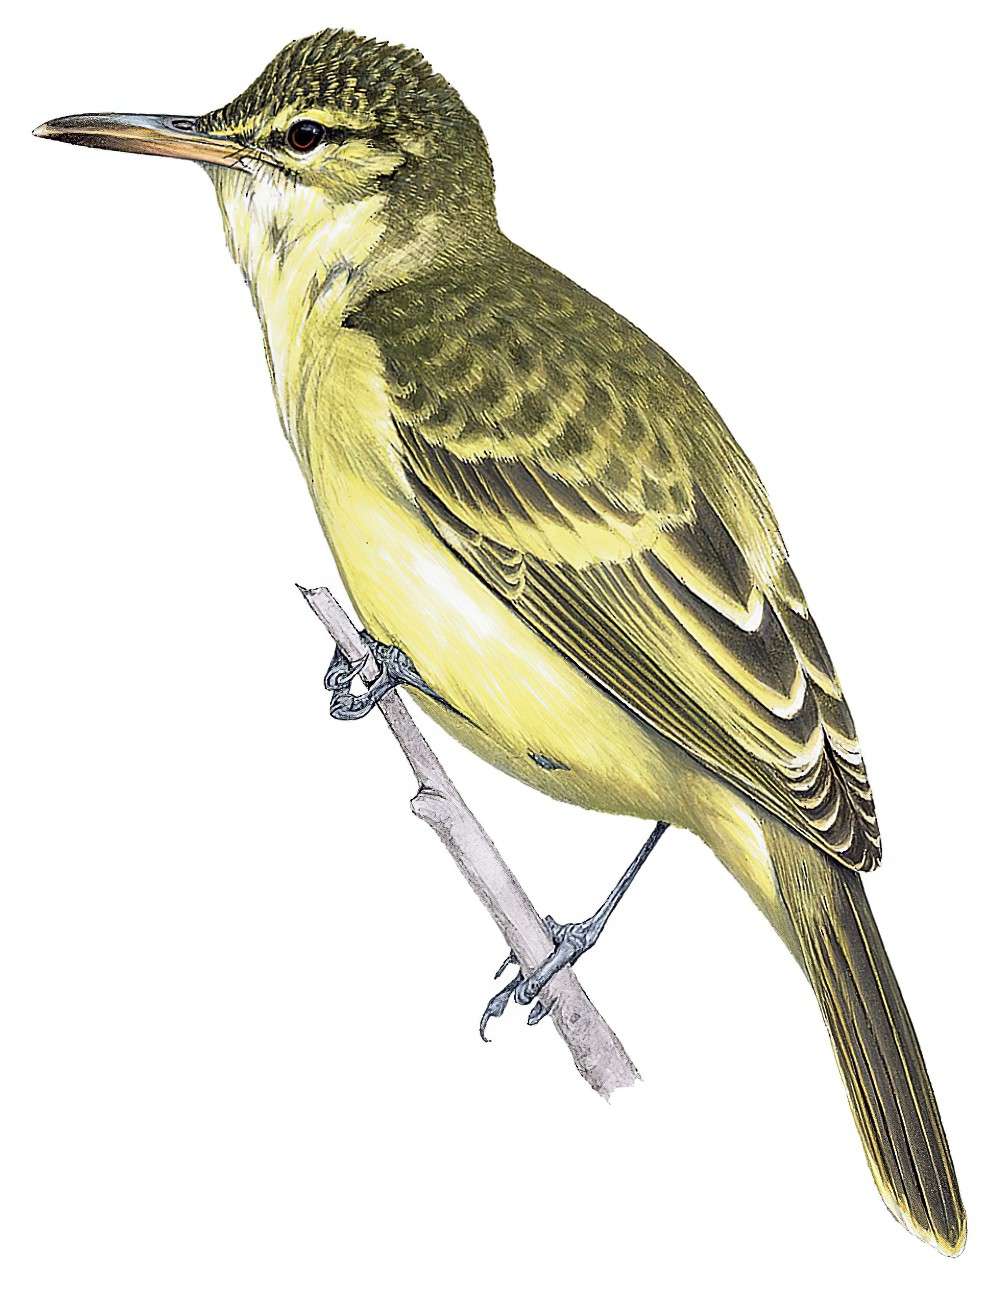 Society Islands Reed Warbler / Acrocephalus musae